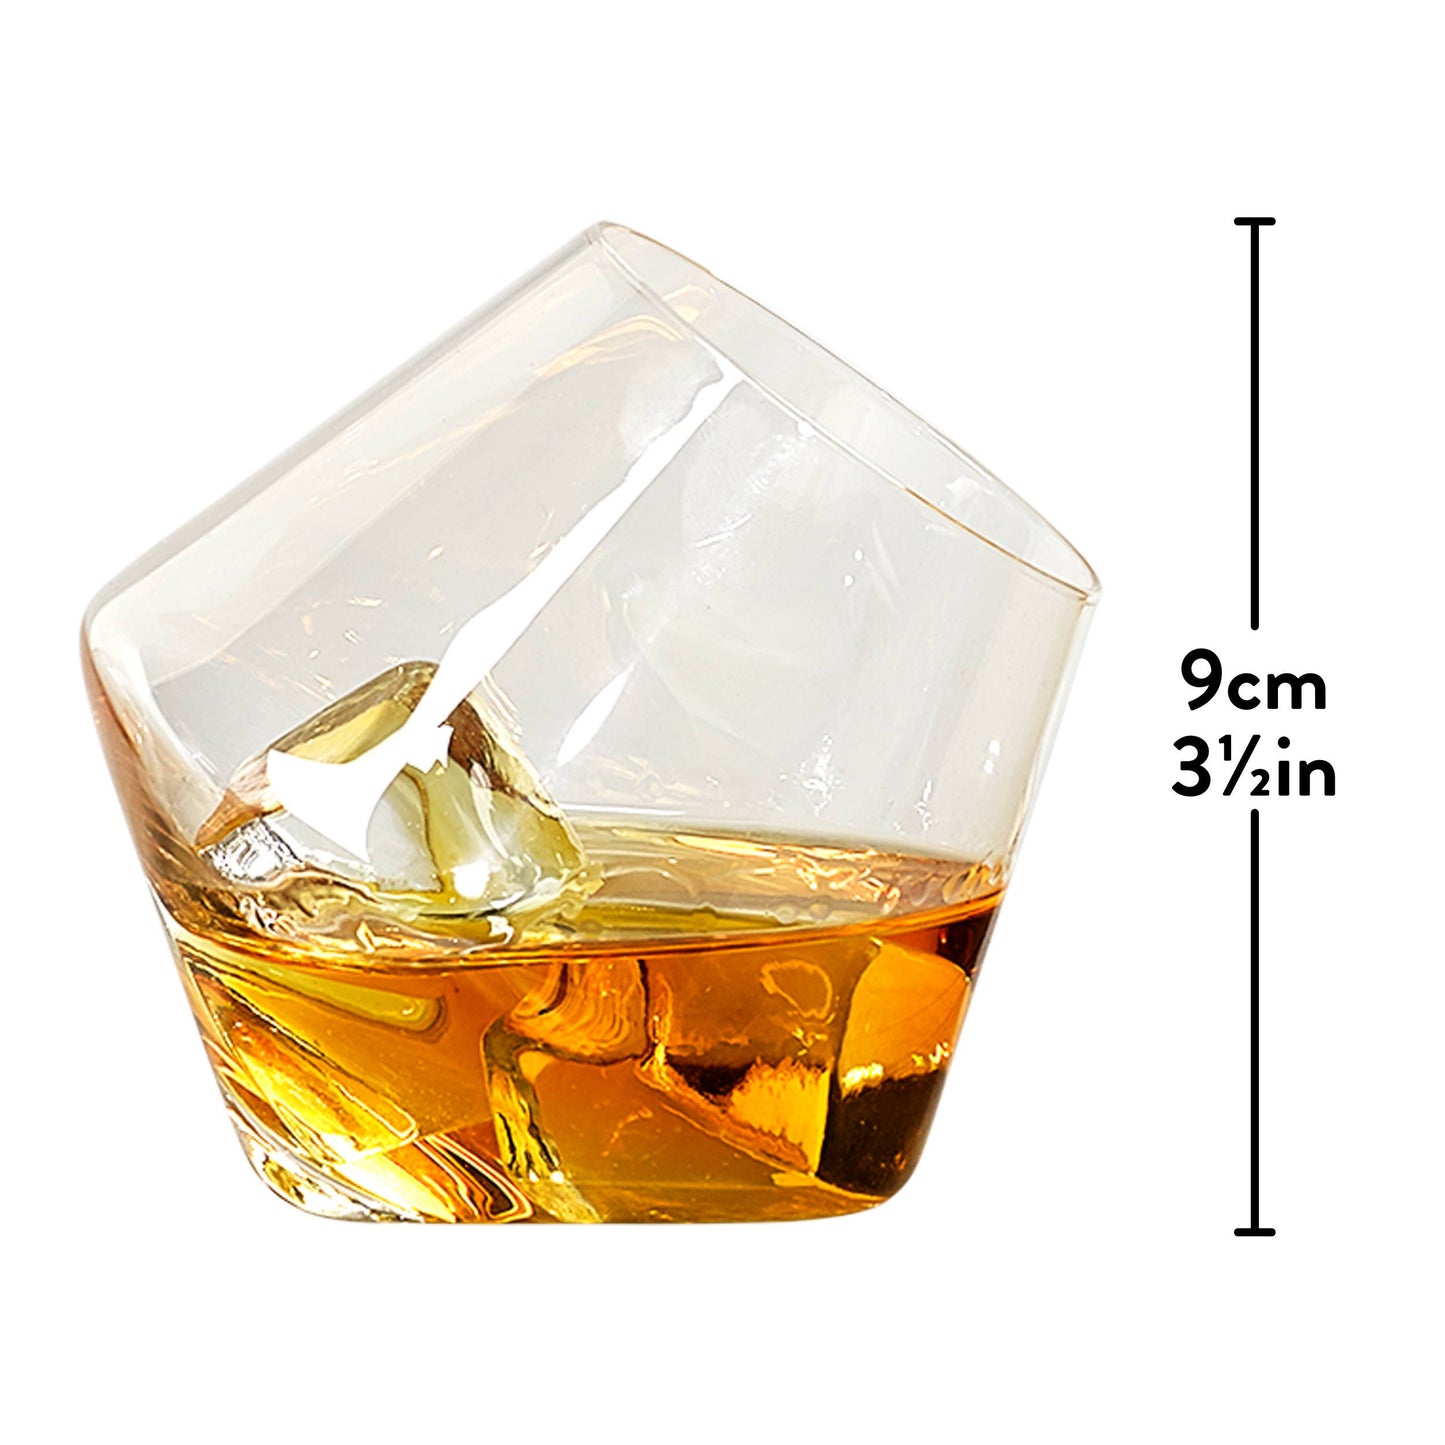 Gentlemen's Hardware - Rocking Whisky Glasses, Set of 2